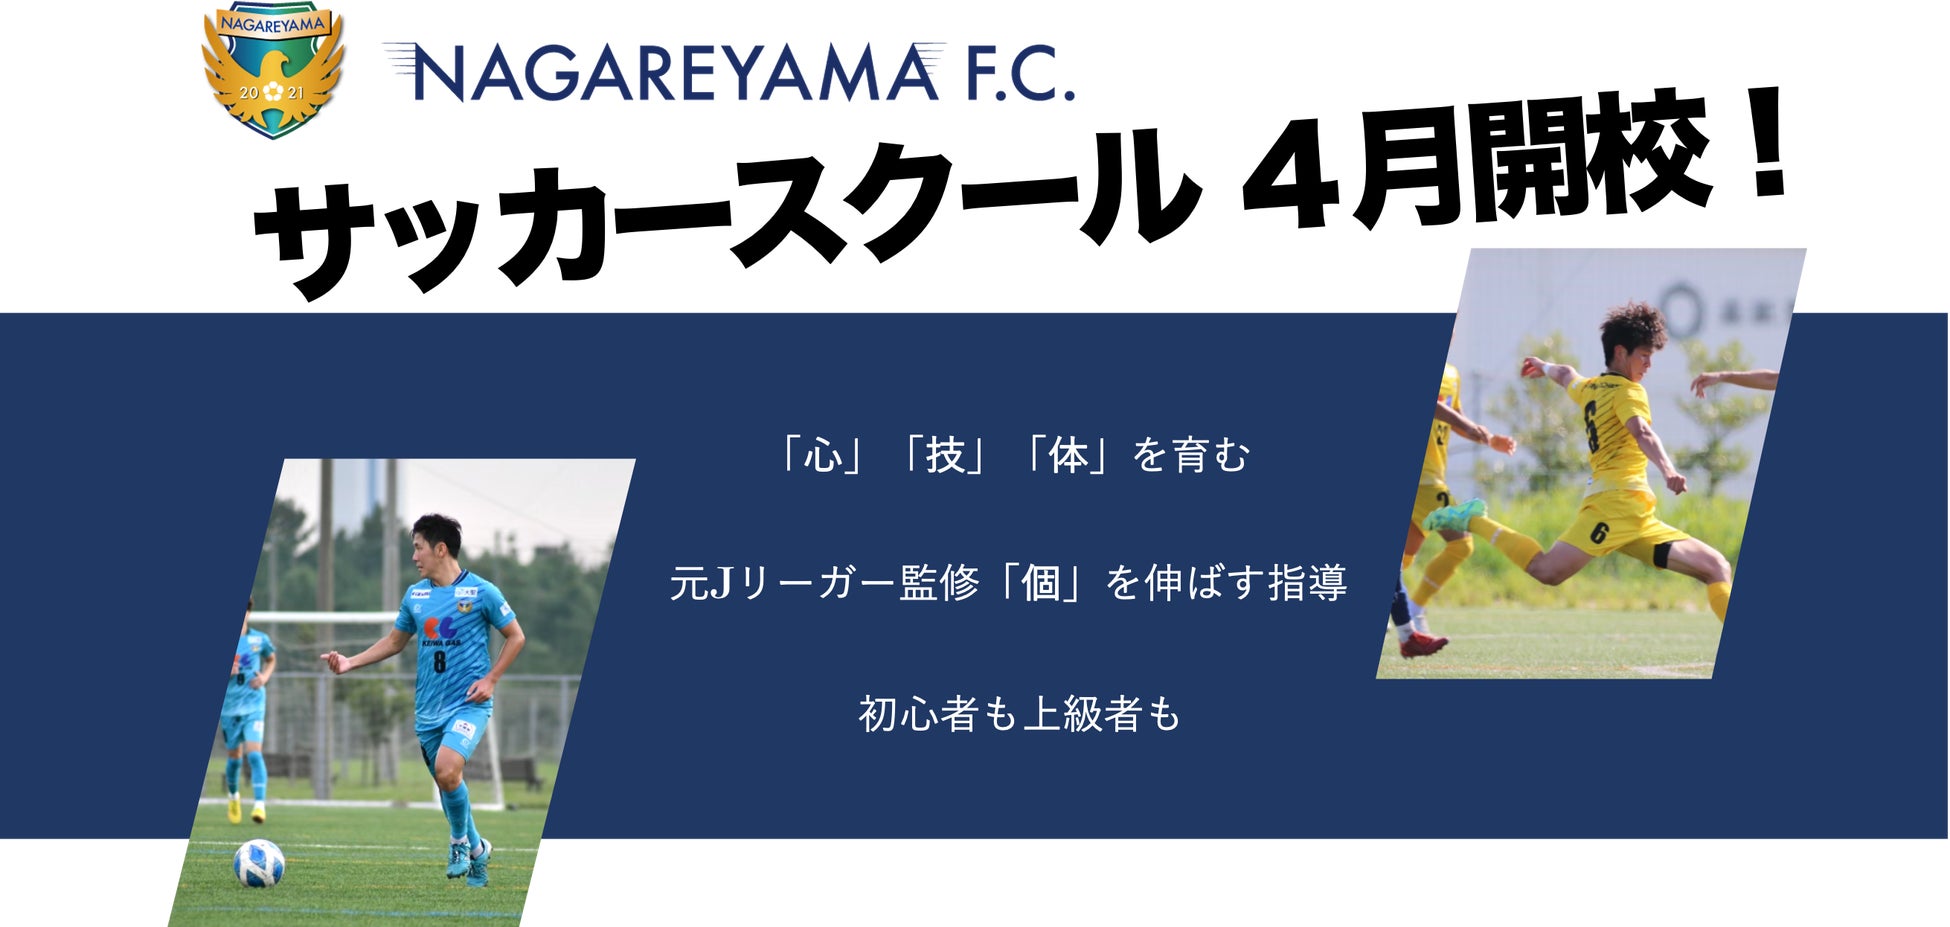 NAGAREYAMA F.C.サッカースクール開校